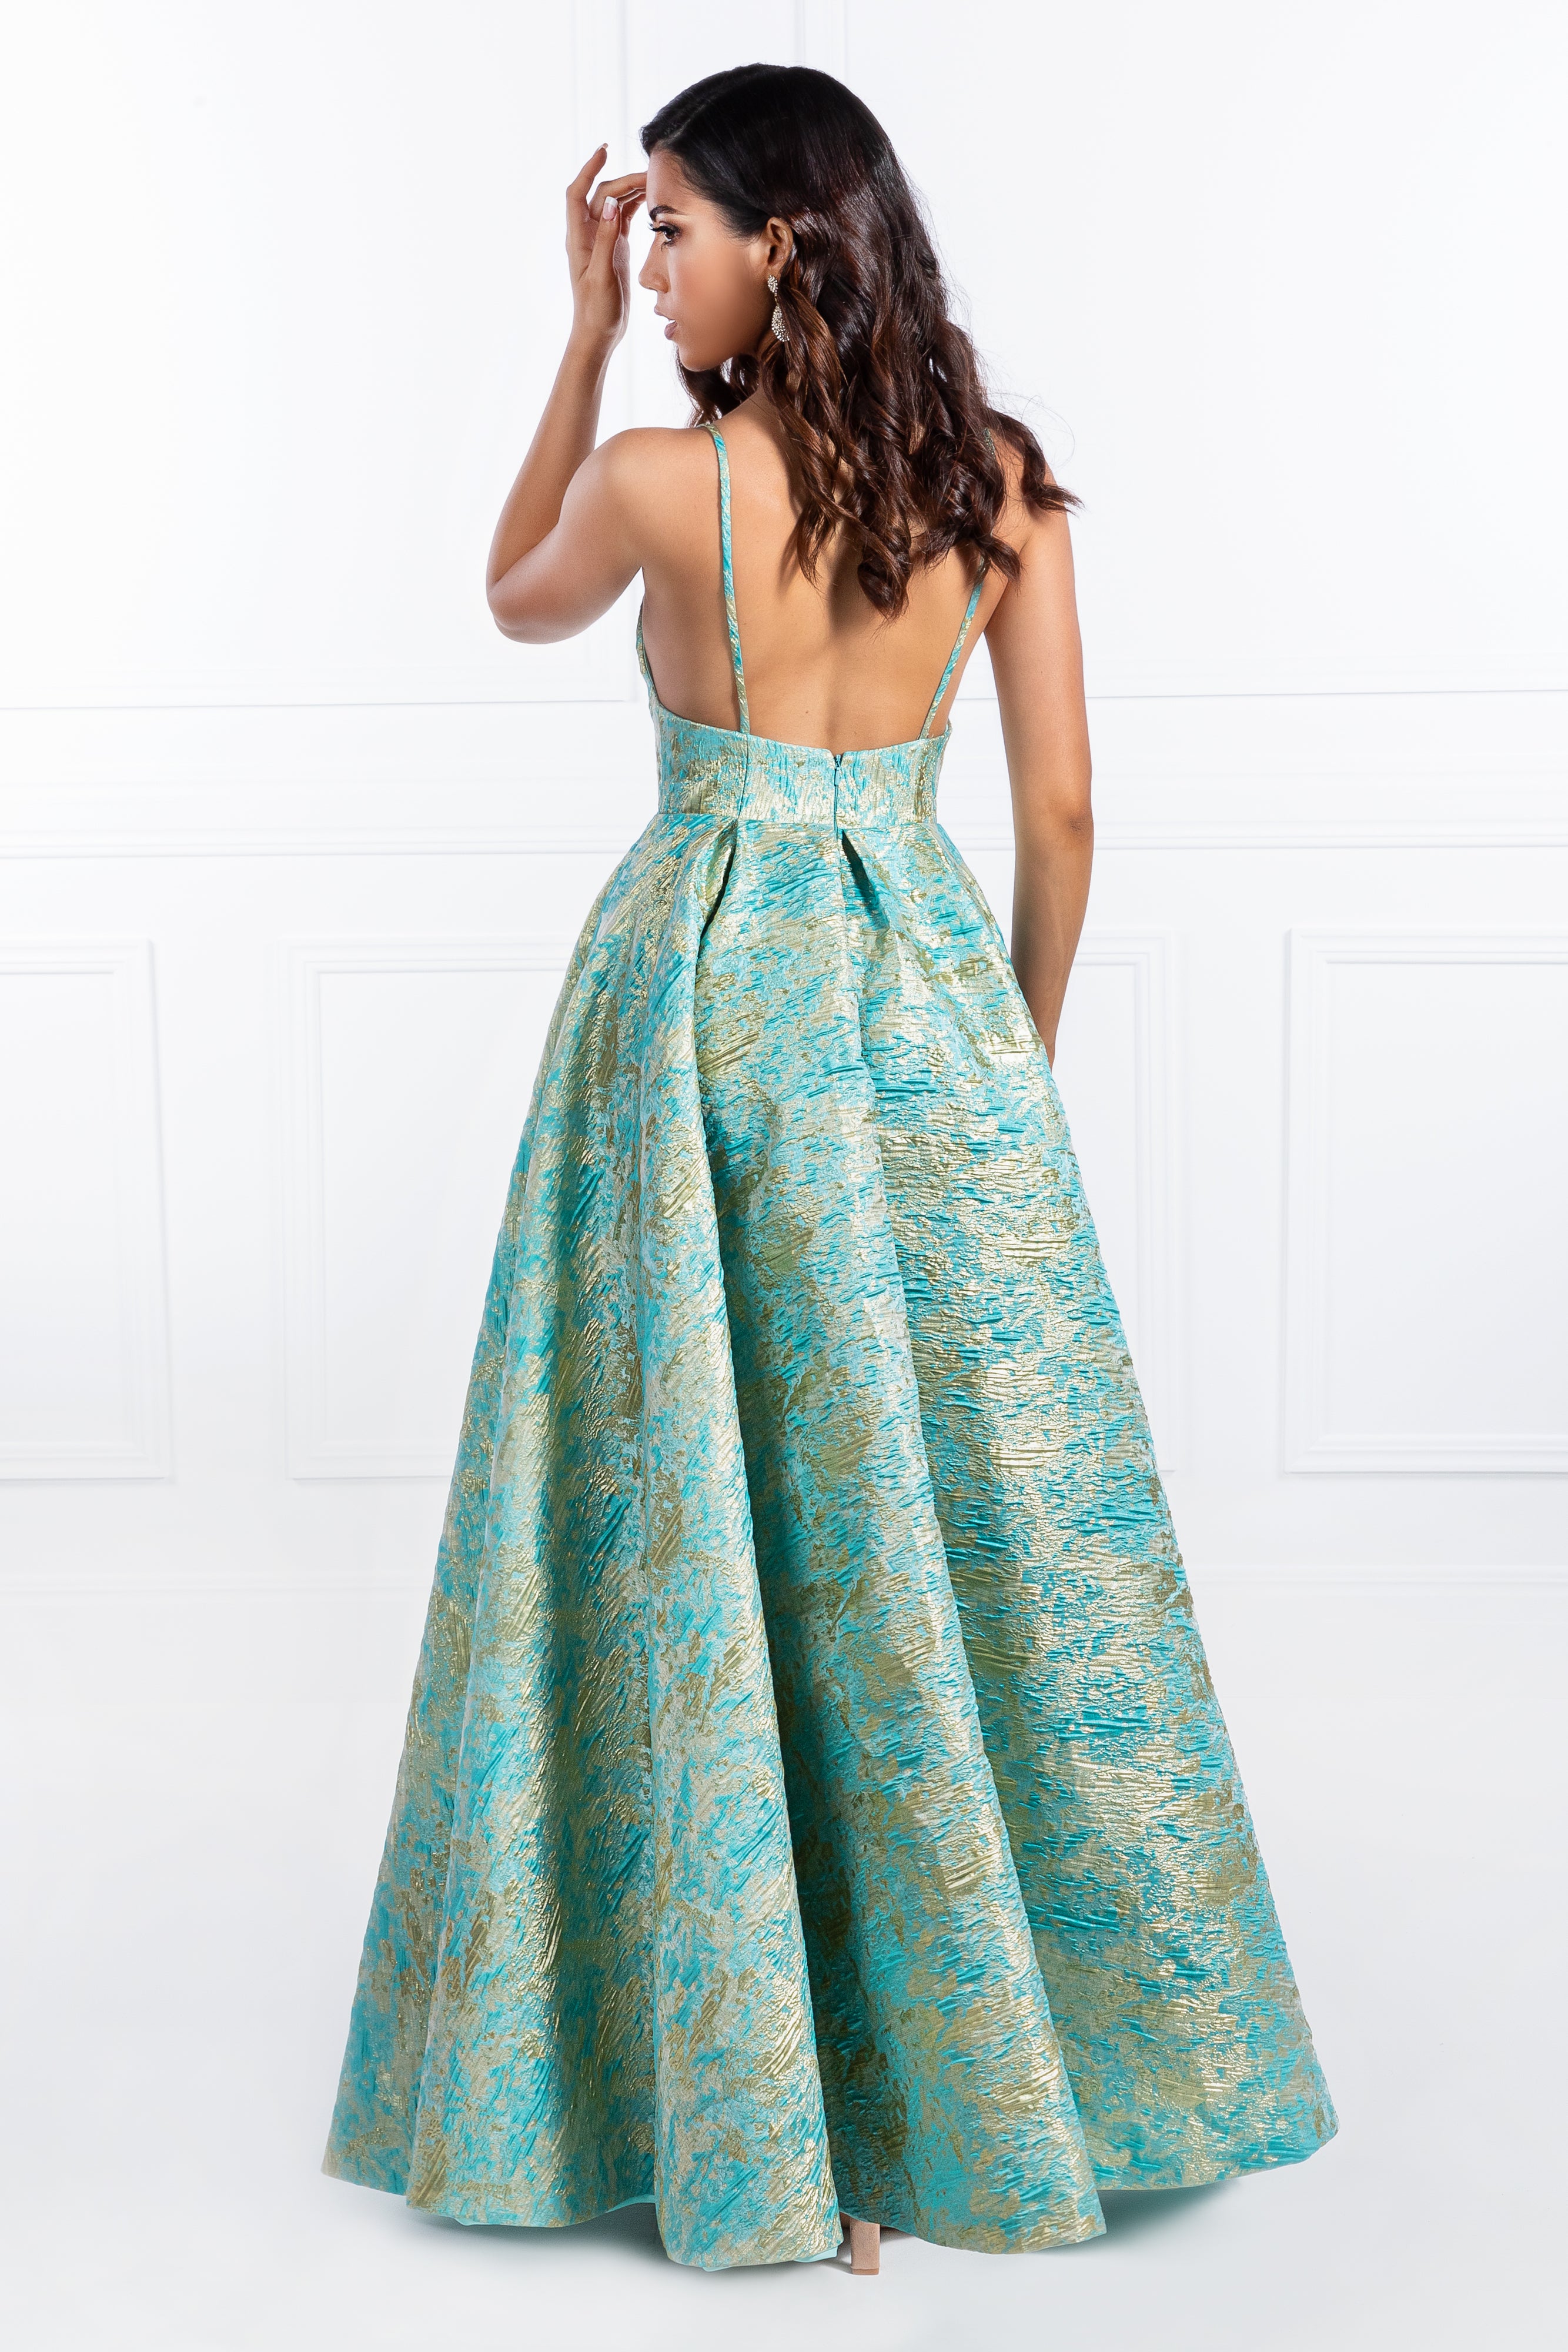 Honey Couture INGA Floral Teal Print Formal Dress